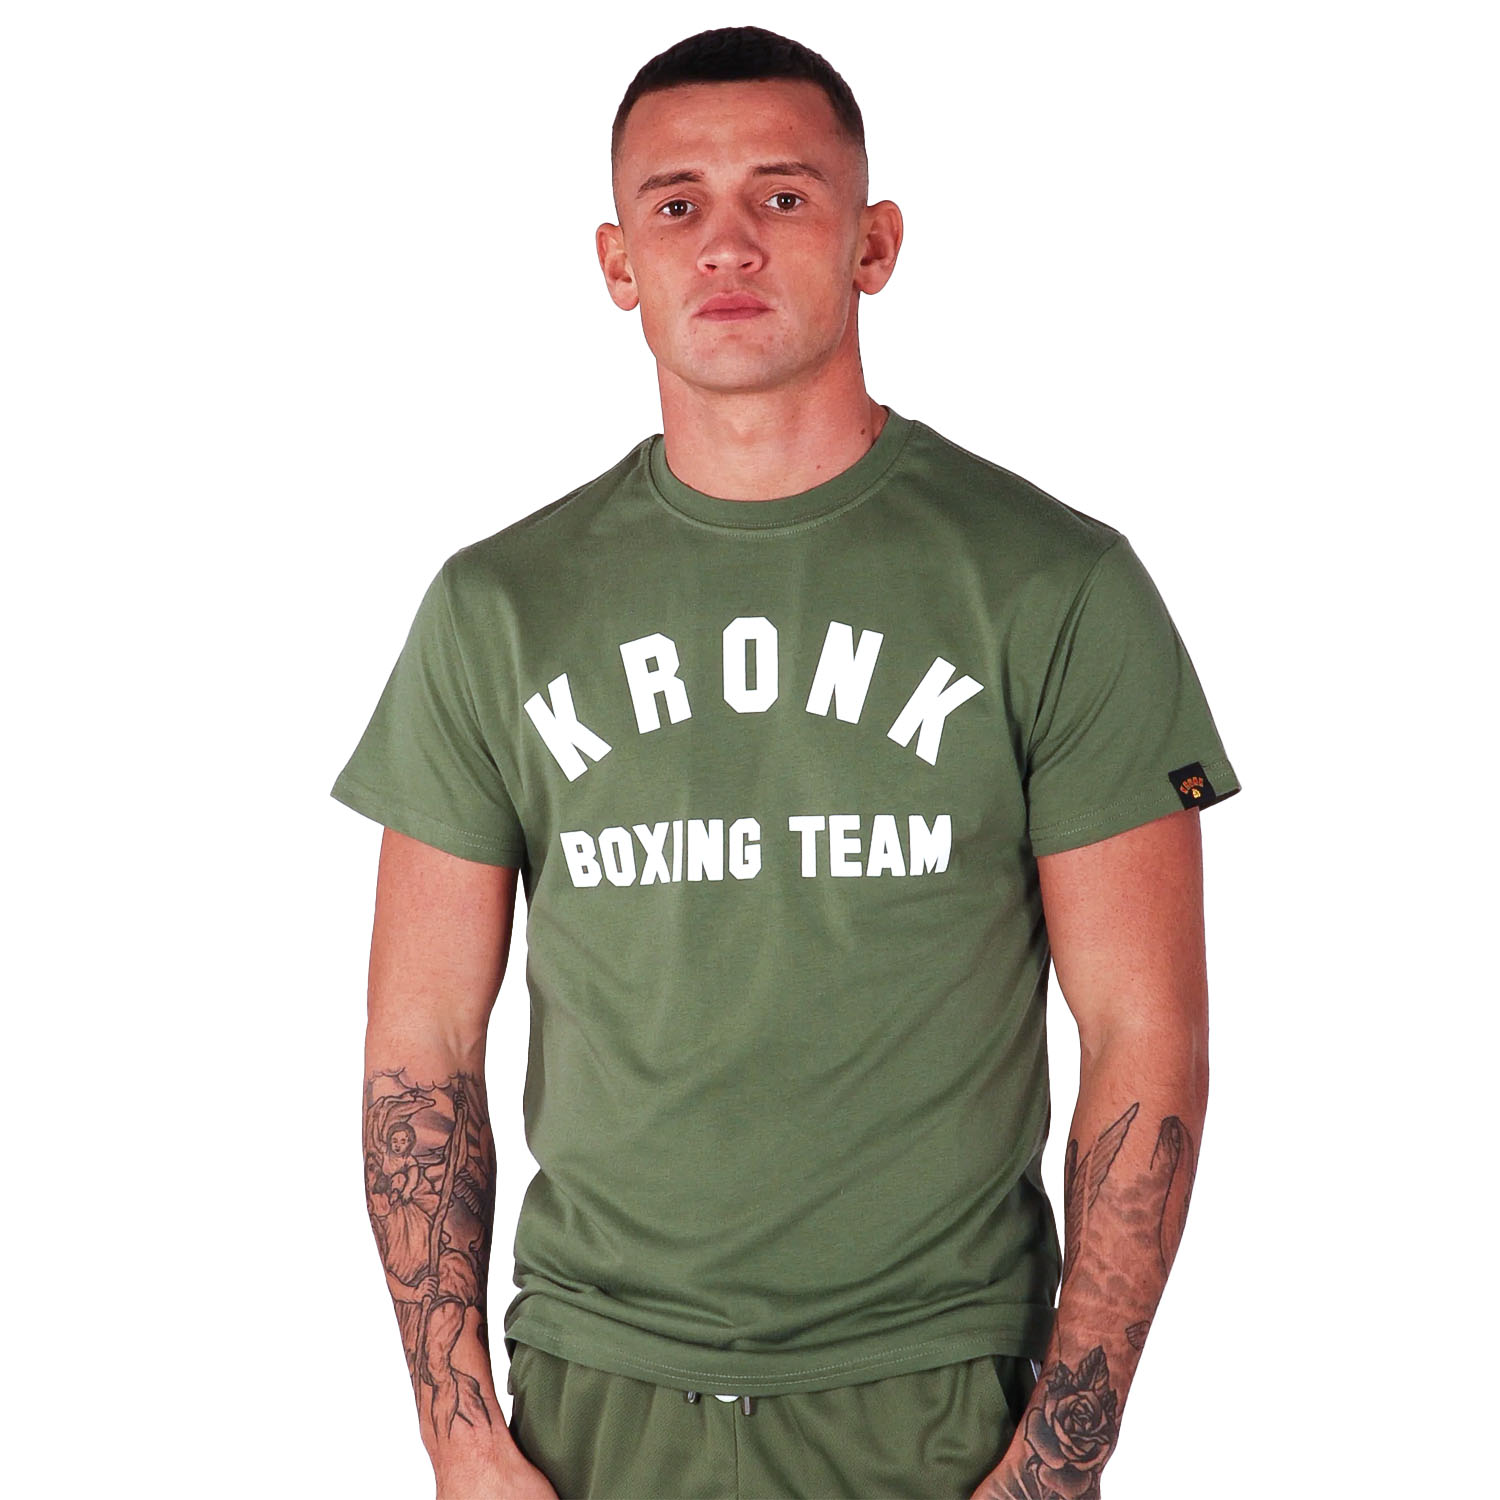 KRONK T-Shirt, Boxing Team, green